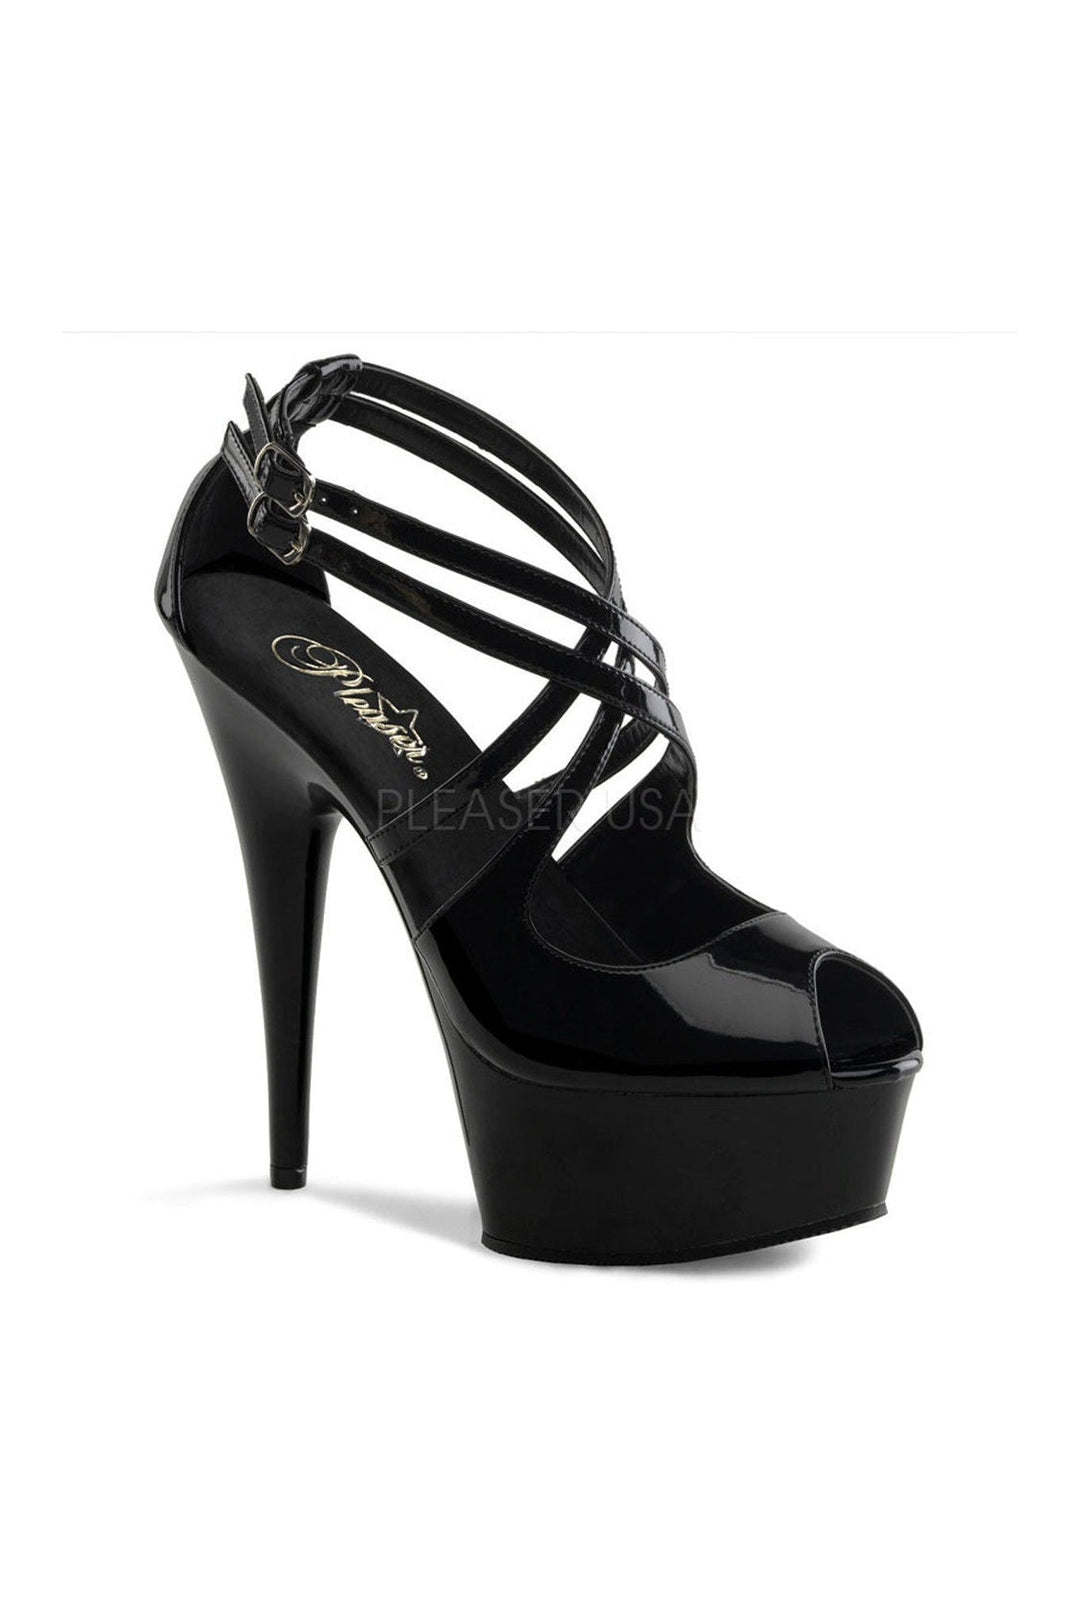 DELIGHT-612 Platform Sandal | Black Patent-Pleaser-Black-Sandals-SEXYSHOES.COM